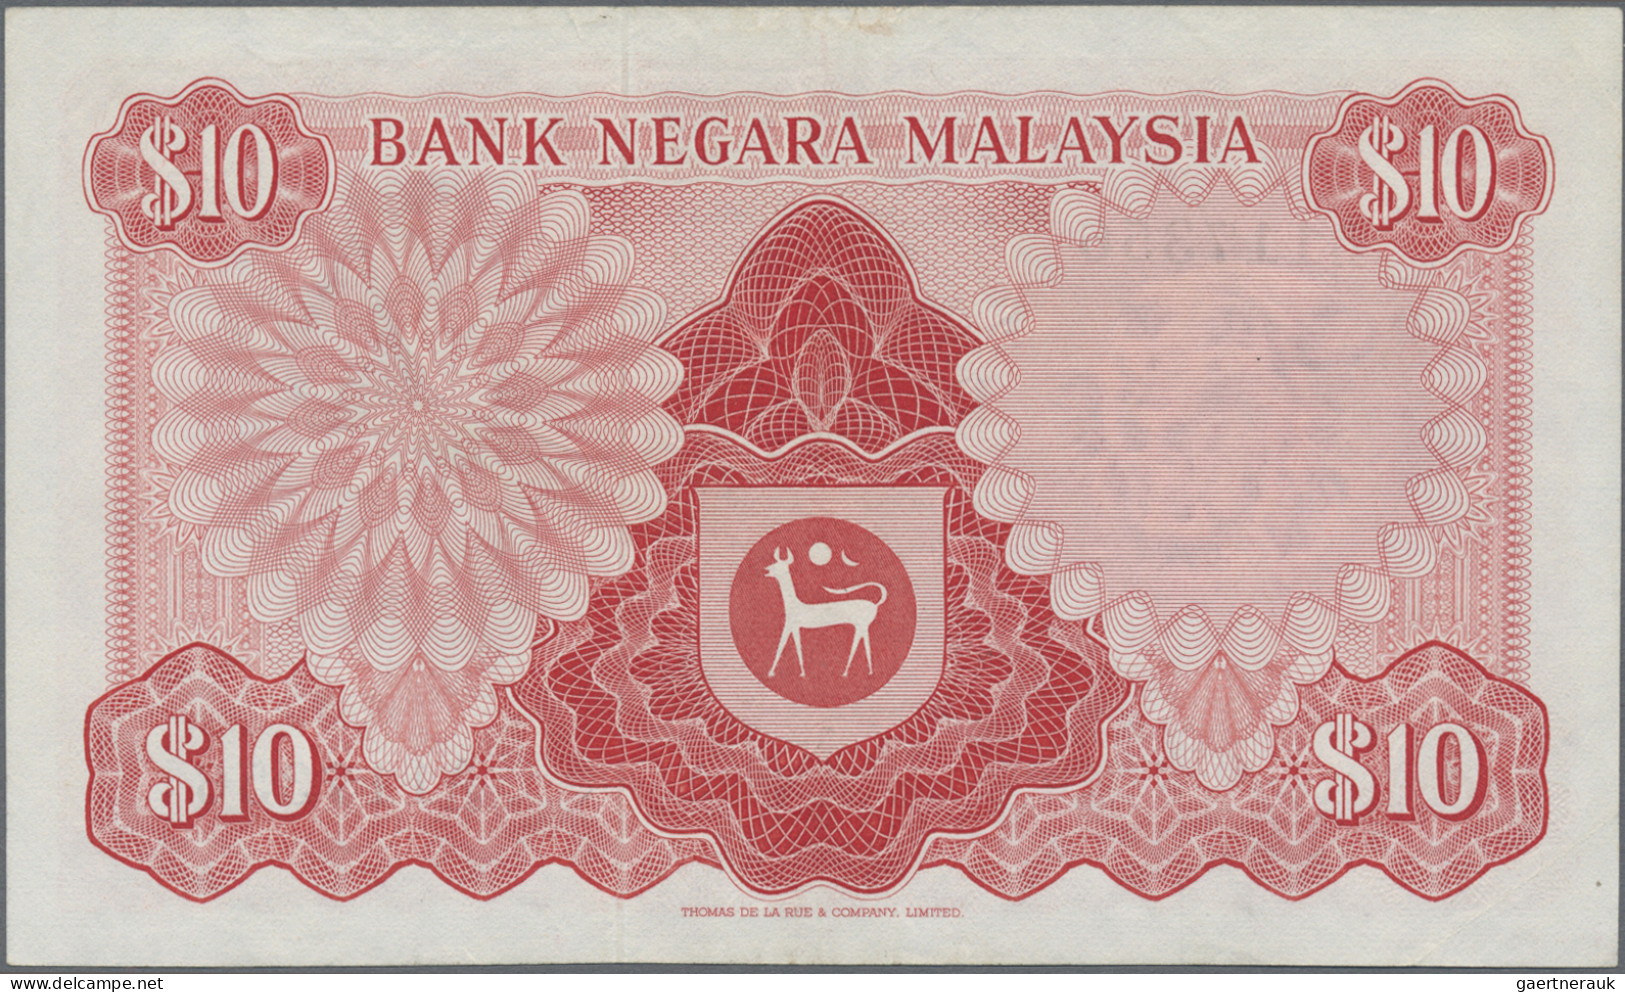 Malaysia: Bank Negara Malaysia, lot with 6 banknotes, 1967-1981 series, with 1,